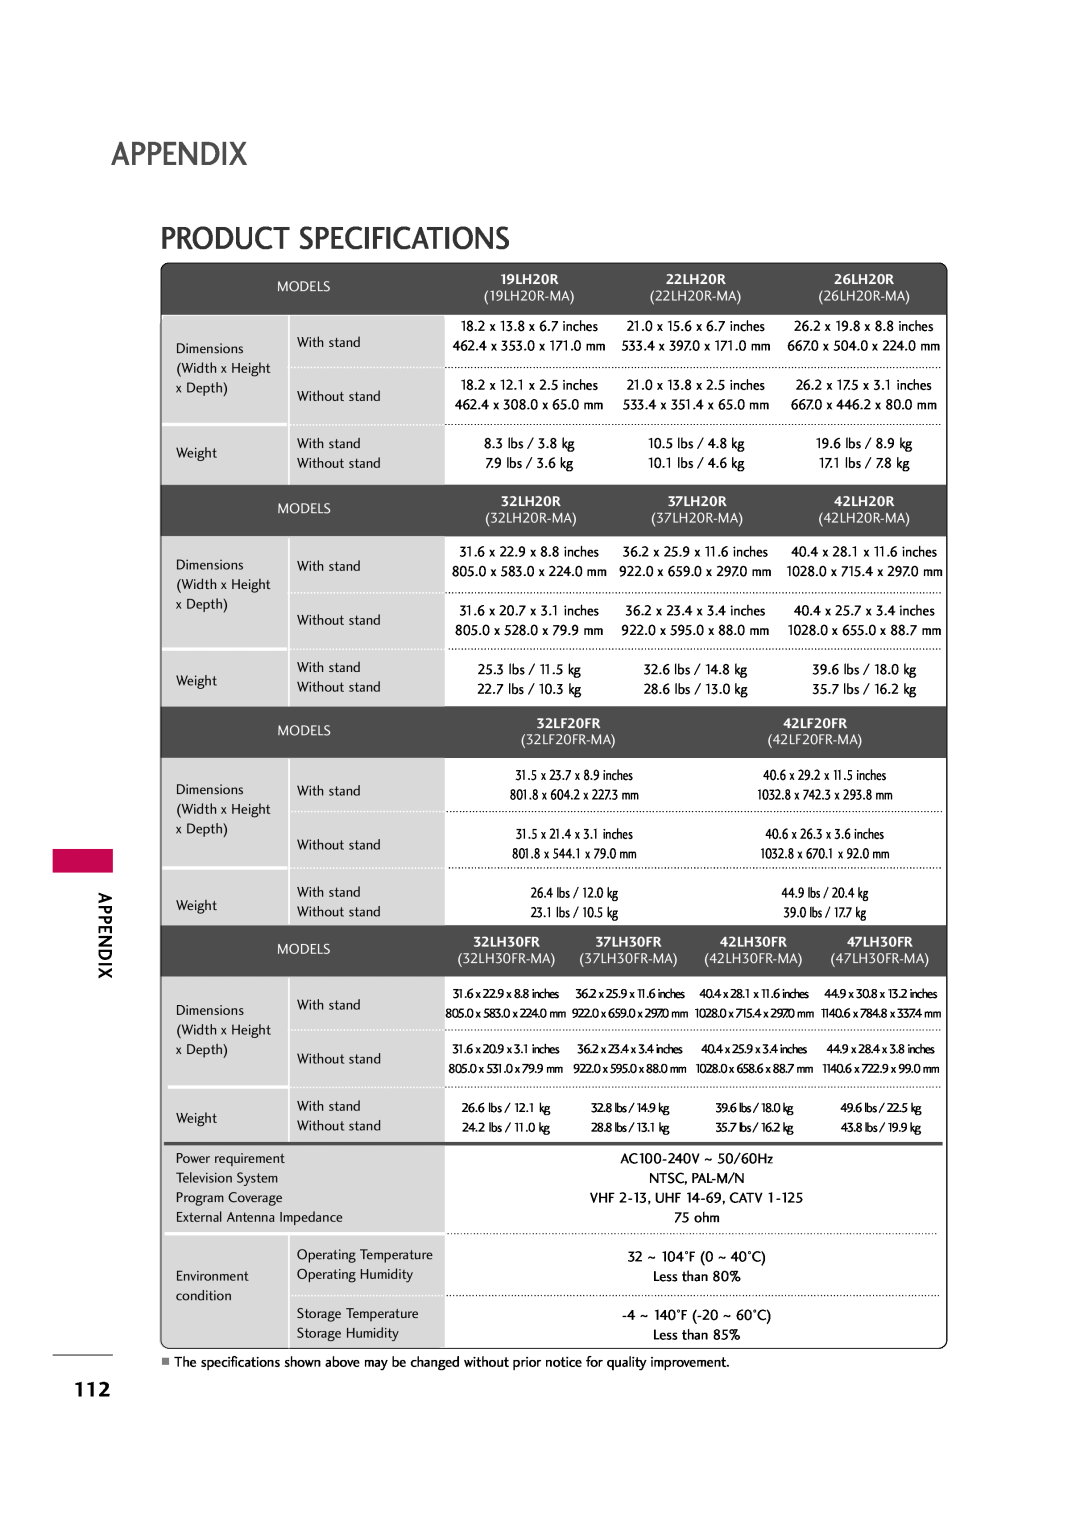 LG Electronics 37LH20R Product Specifications, Appendix, Models, 32LF20FR-MA, 42LF20FR-MA, 32LH30FR, 37LH30FR 